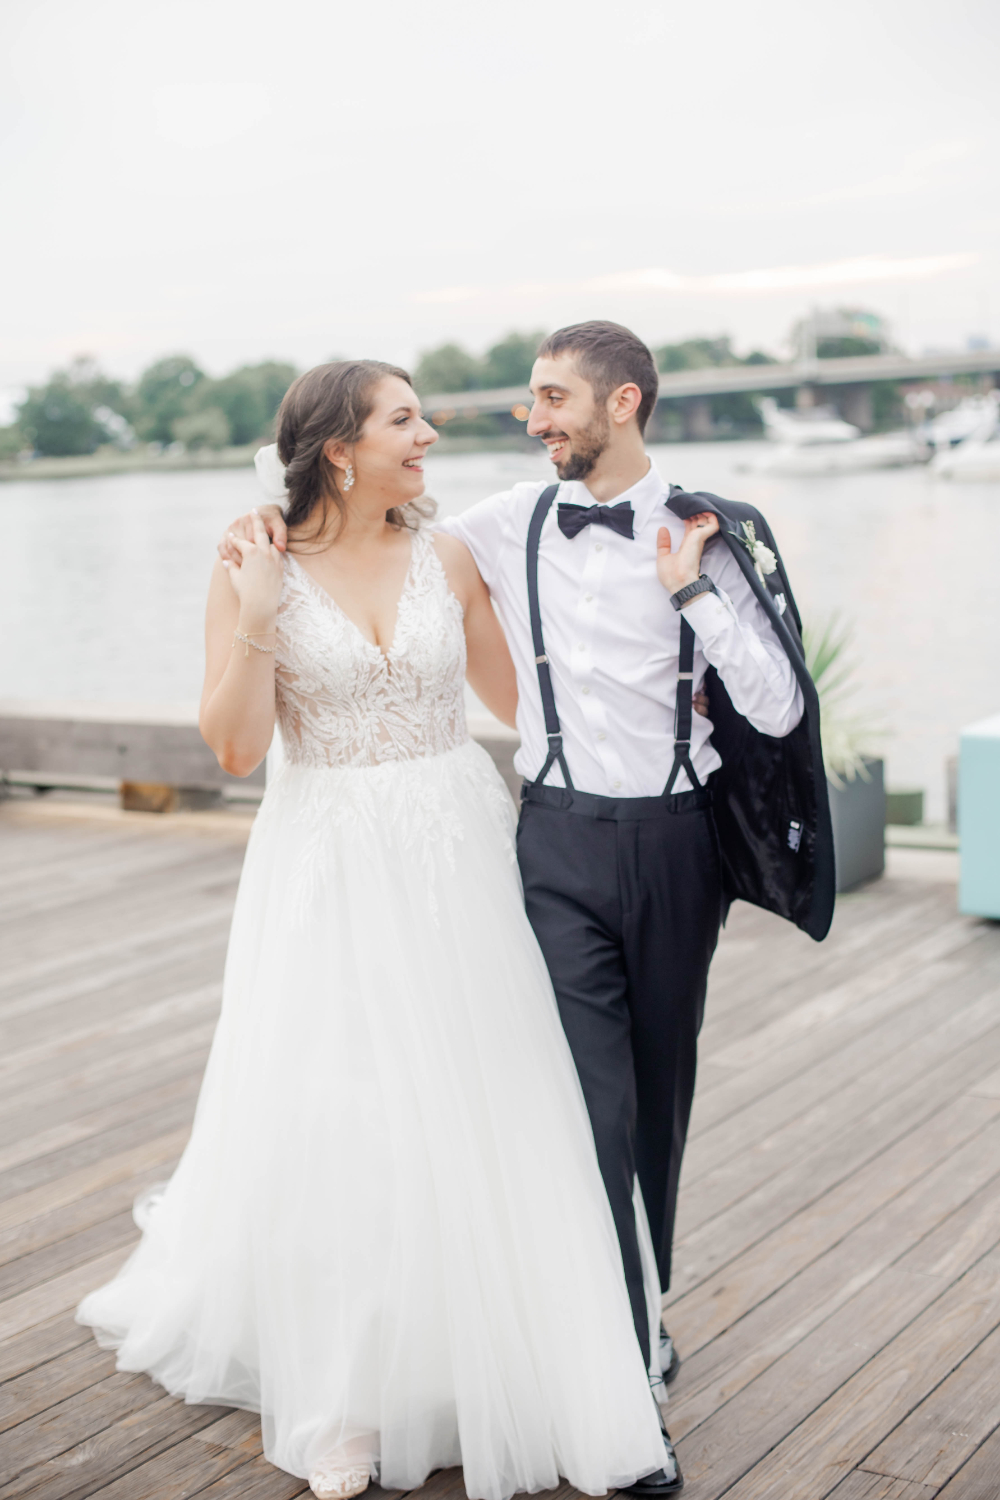 Pier waterfront wedding photos